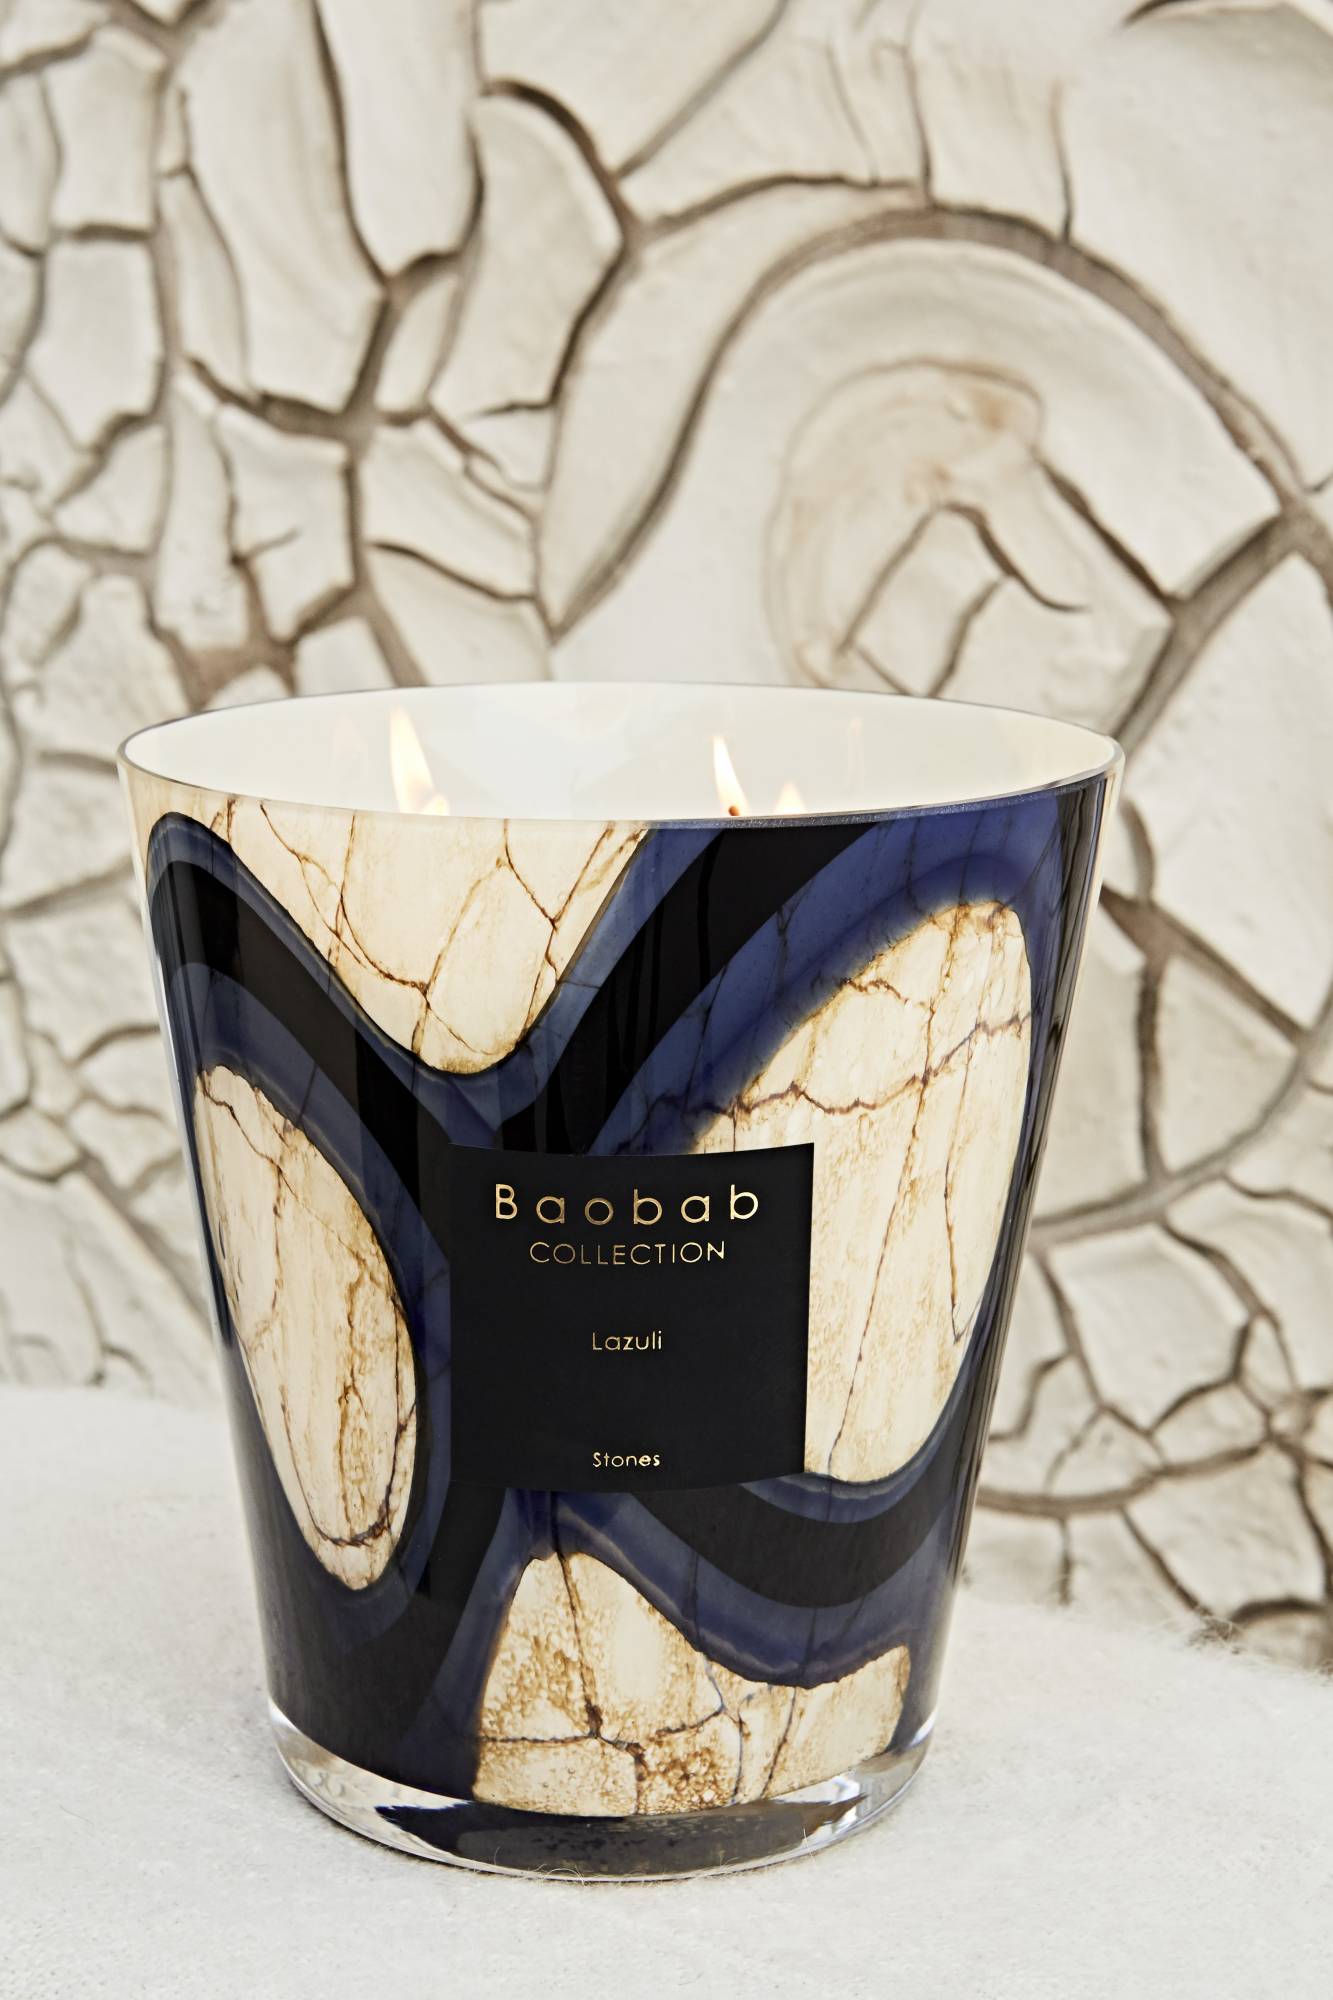 Bougie Baobab collection boutique lyon